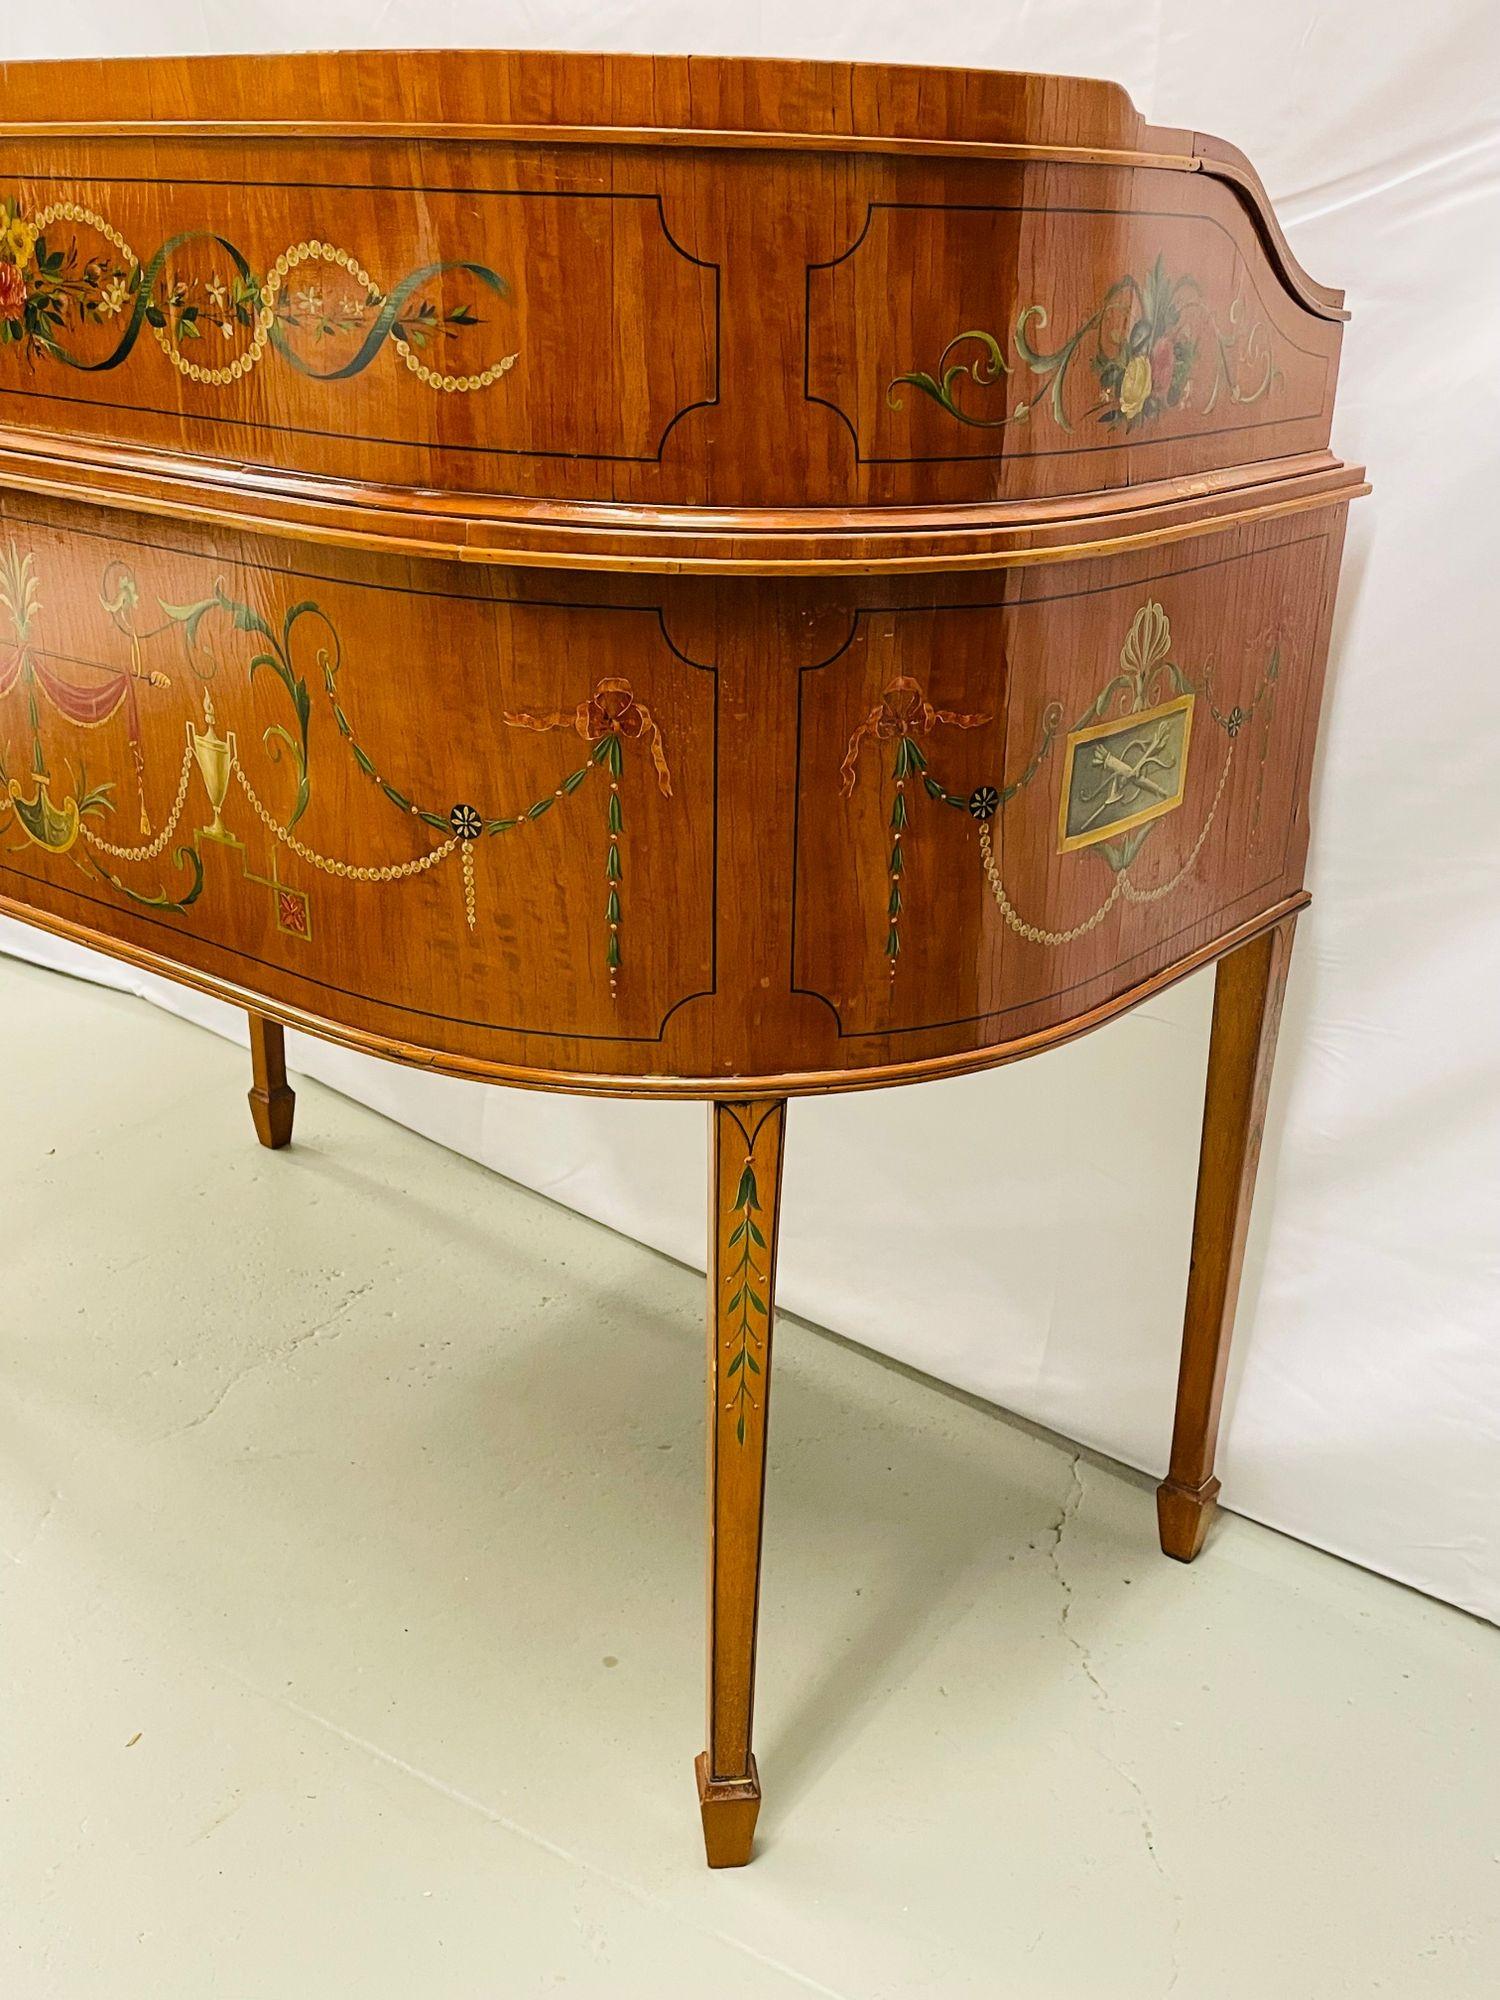 Adams Edwardian Inlaid Carlton House Desk, Hand Painted, Angela Kauffman For Sale 1